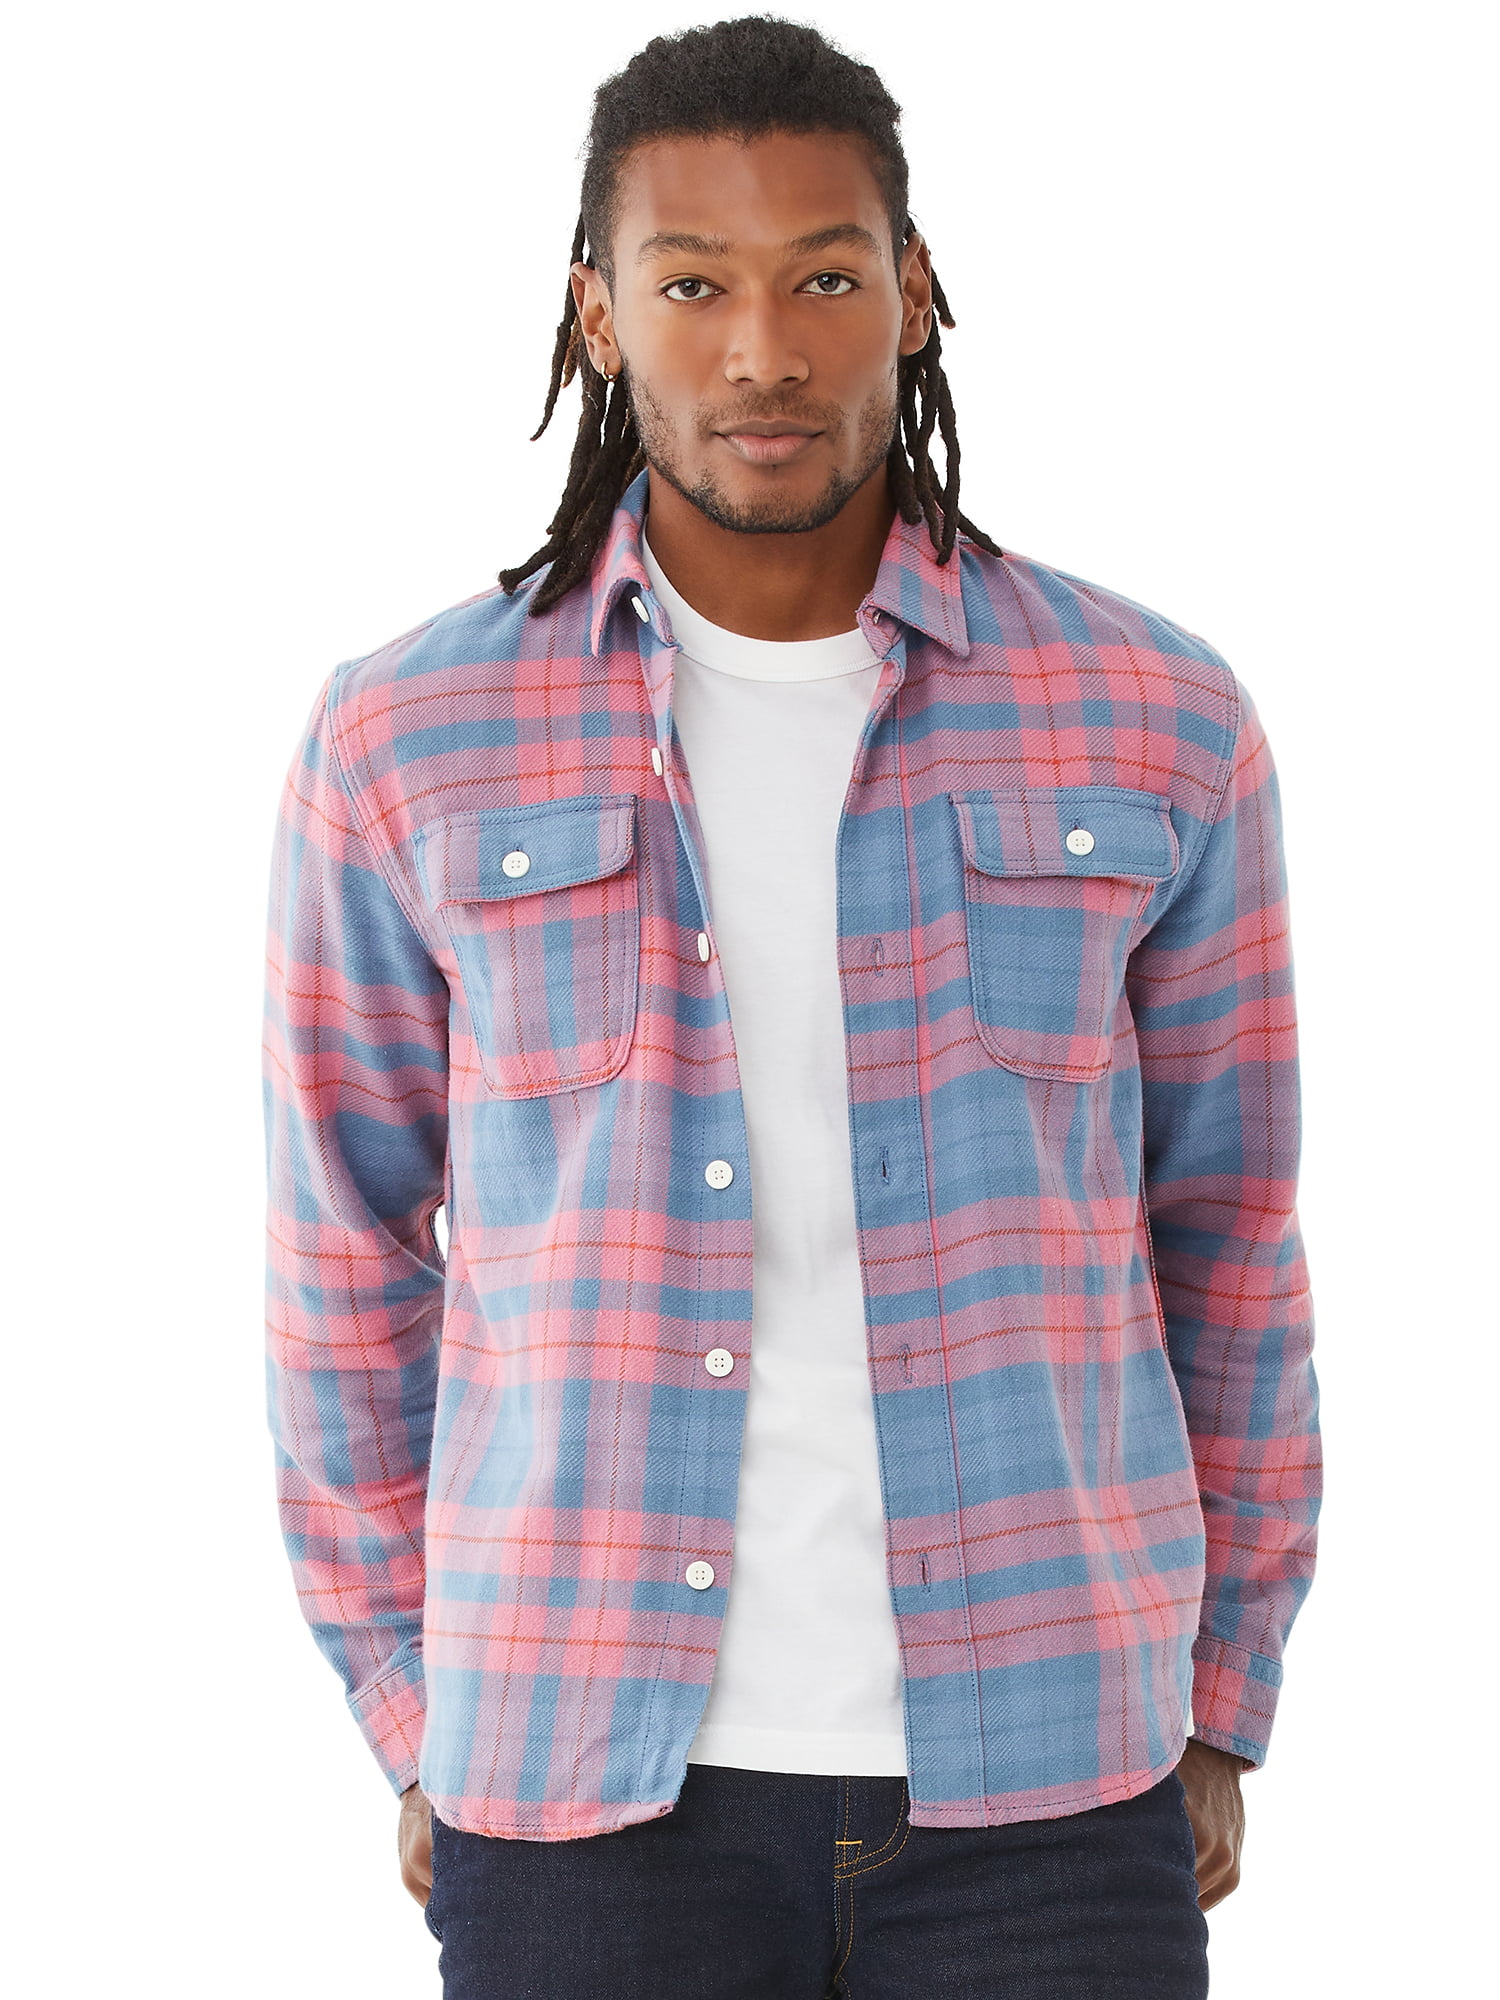 Adults Mens Long Sleeve Cotton Check Lumberjack Flannel Shirts Work Pocket 2XL 